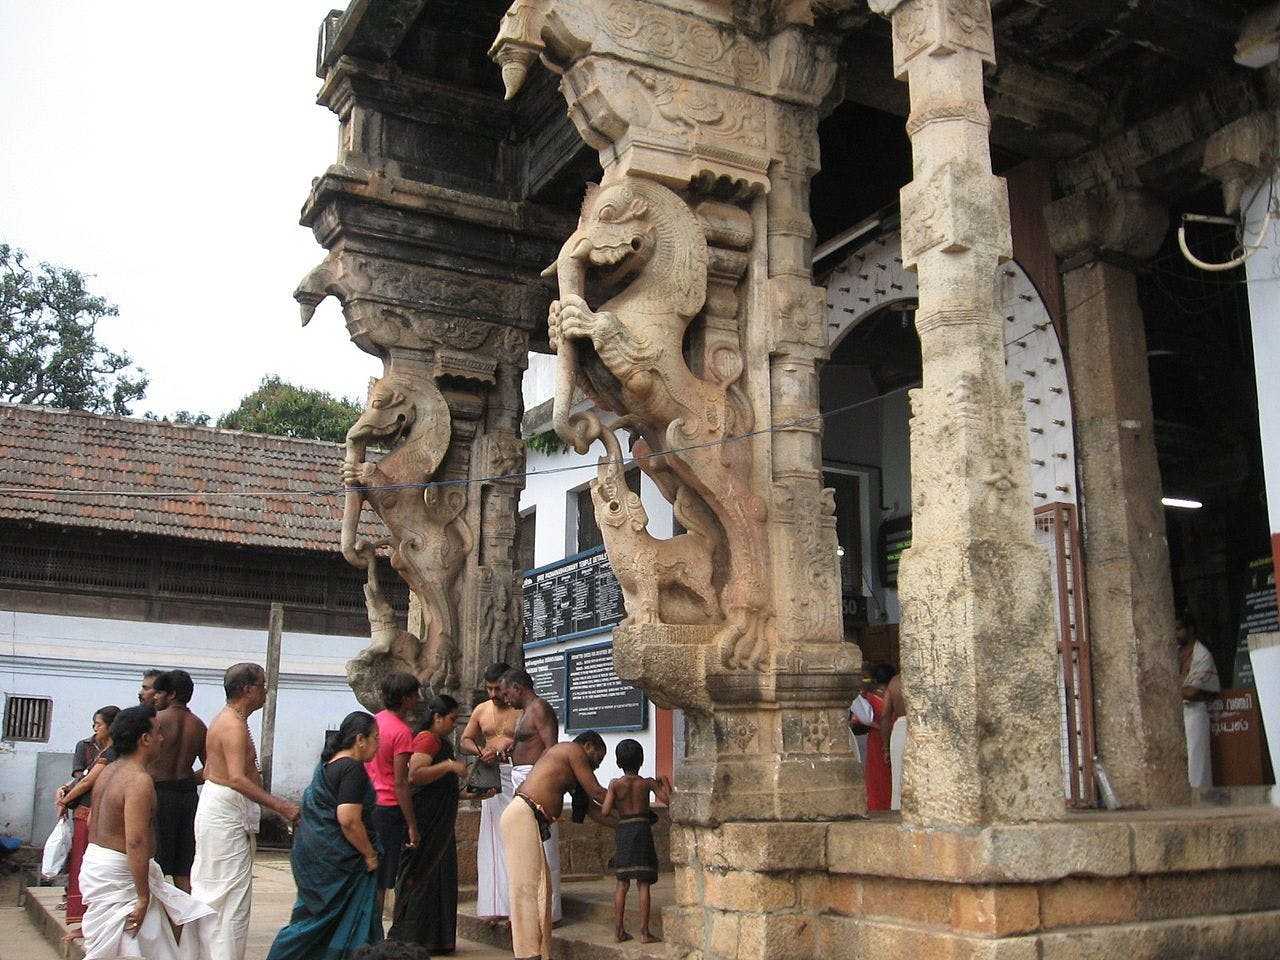 Entrance to Padmanabhaswamy temple